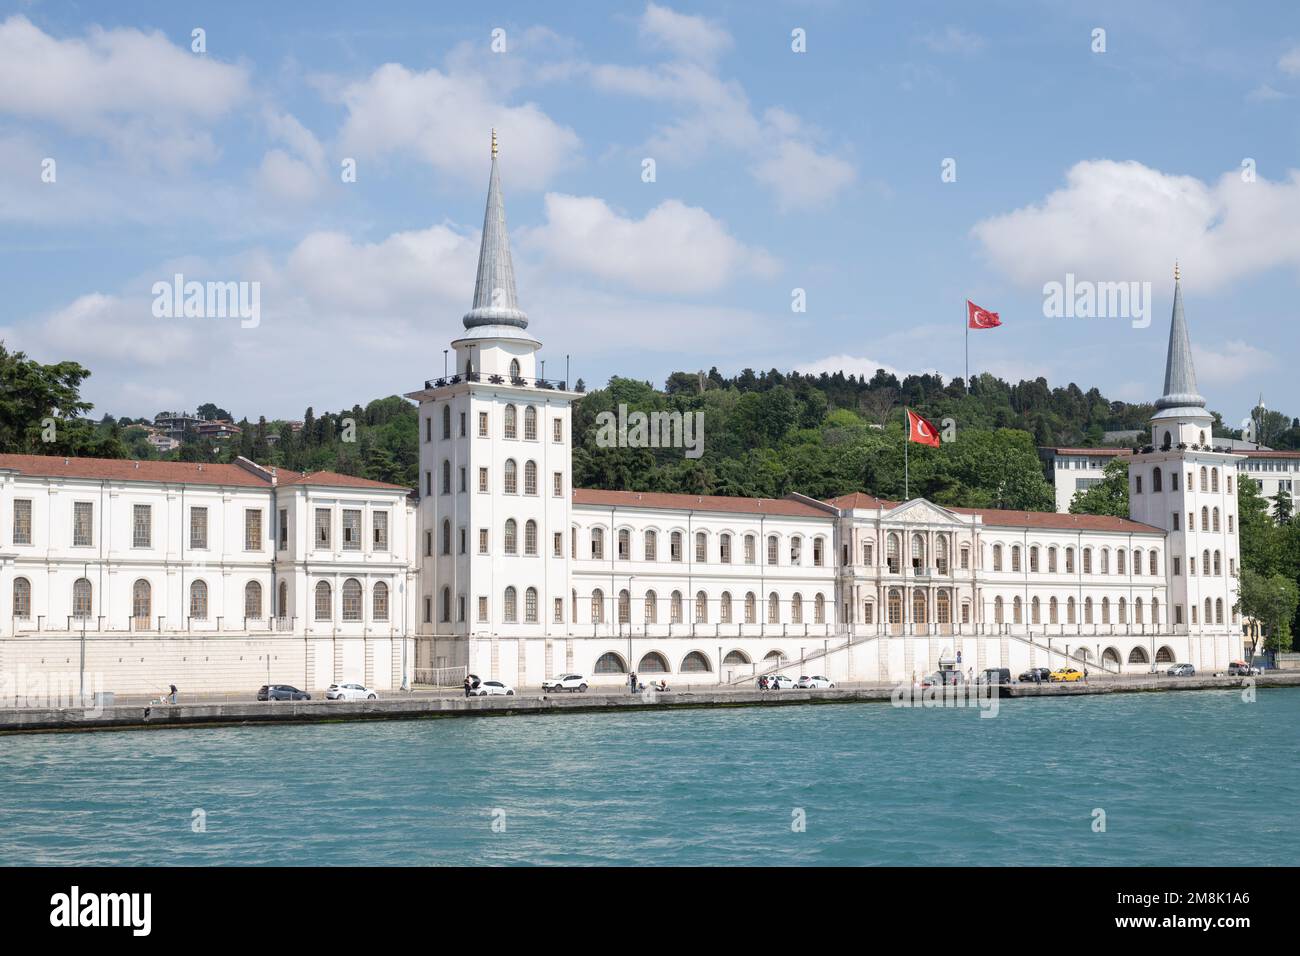 Istanbul Technical University - formerly Kuleli Military High School - Cengelkoy, Istanbul, Turkey Stock Photo